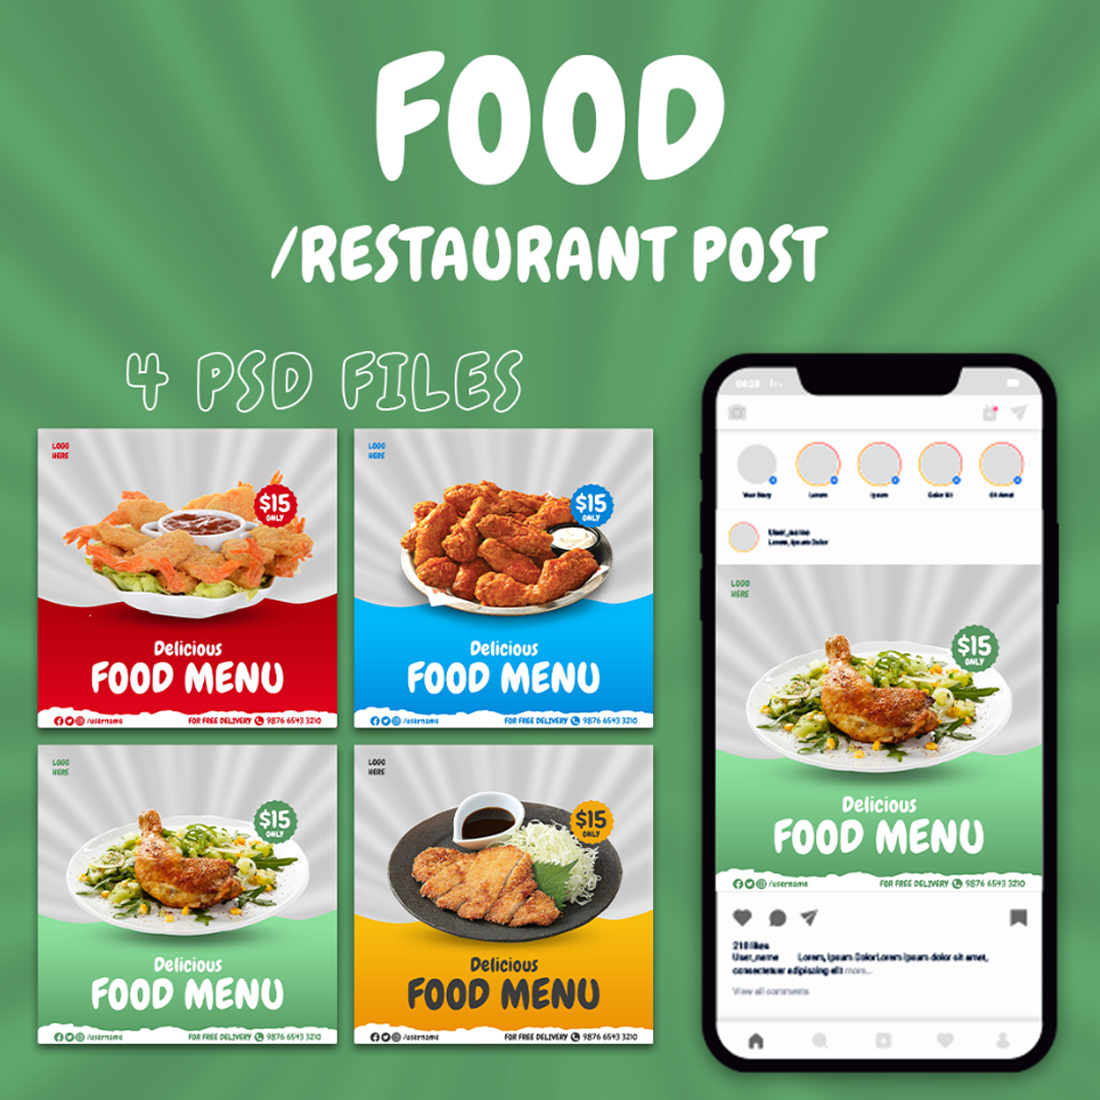 4 Delicious Food Menu Social Media Post Design Templates cover image.